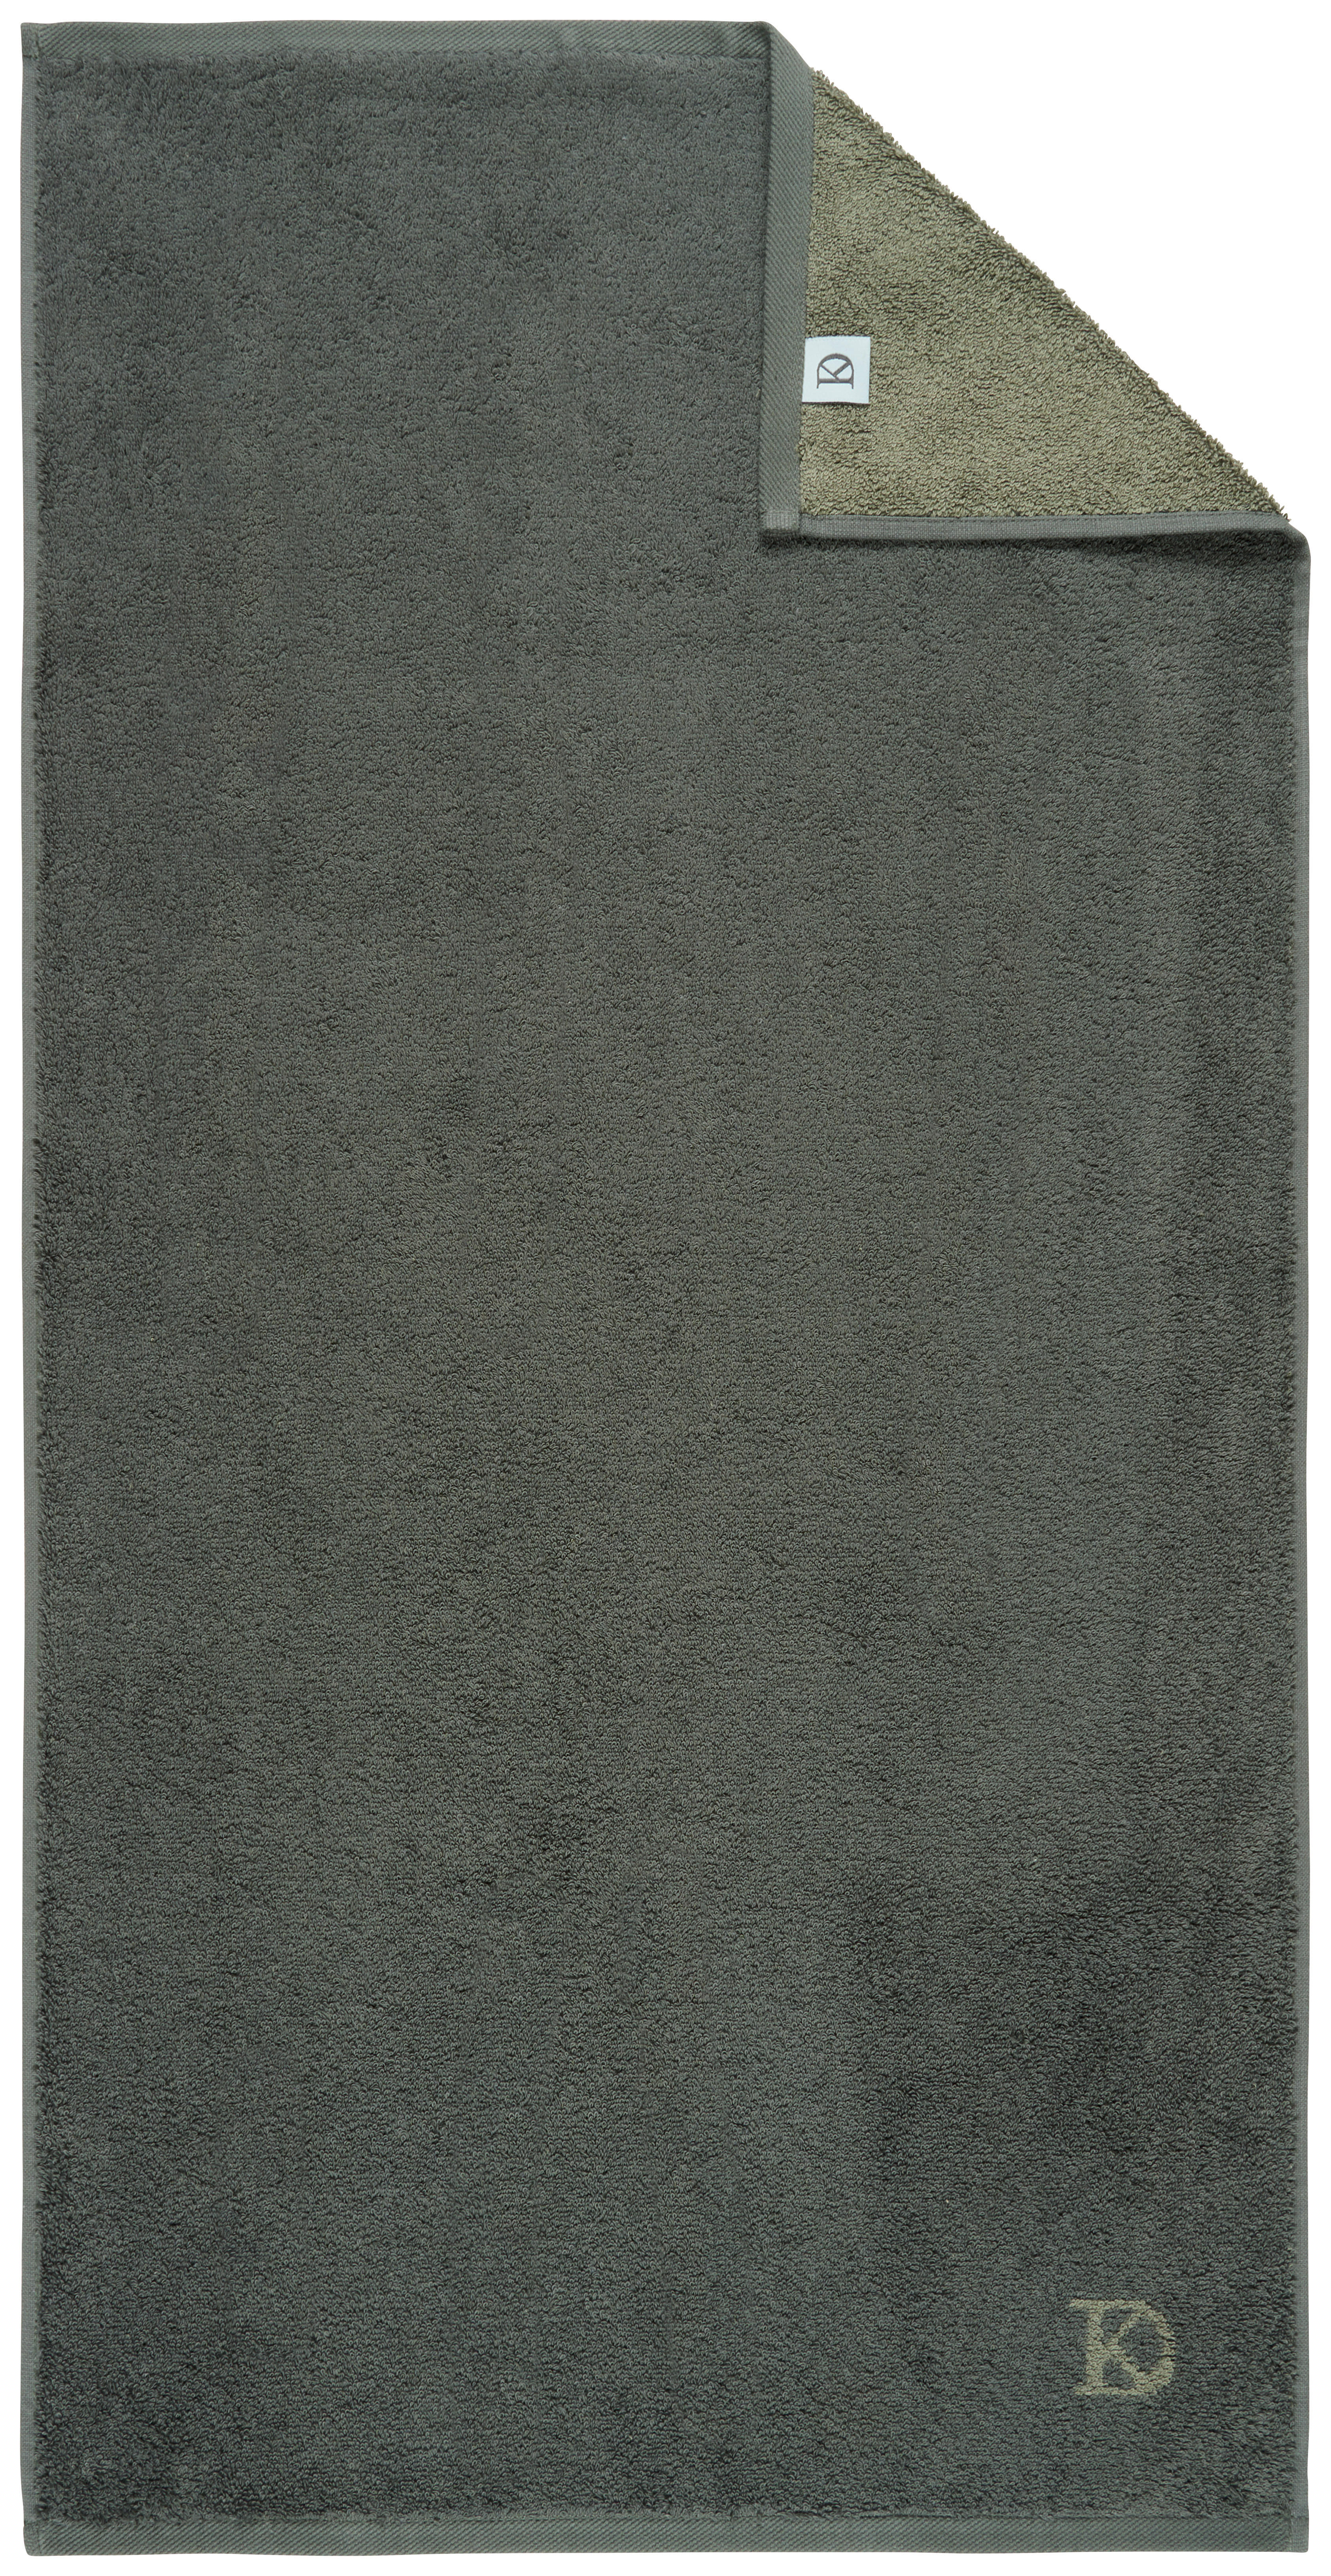 HANDTUCH BASIC  - Grau/Grün, Design, Textil (50/100cm) - Dieter Knoll